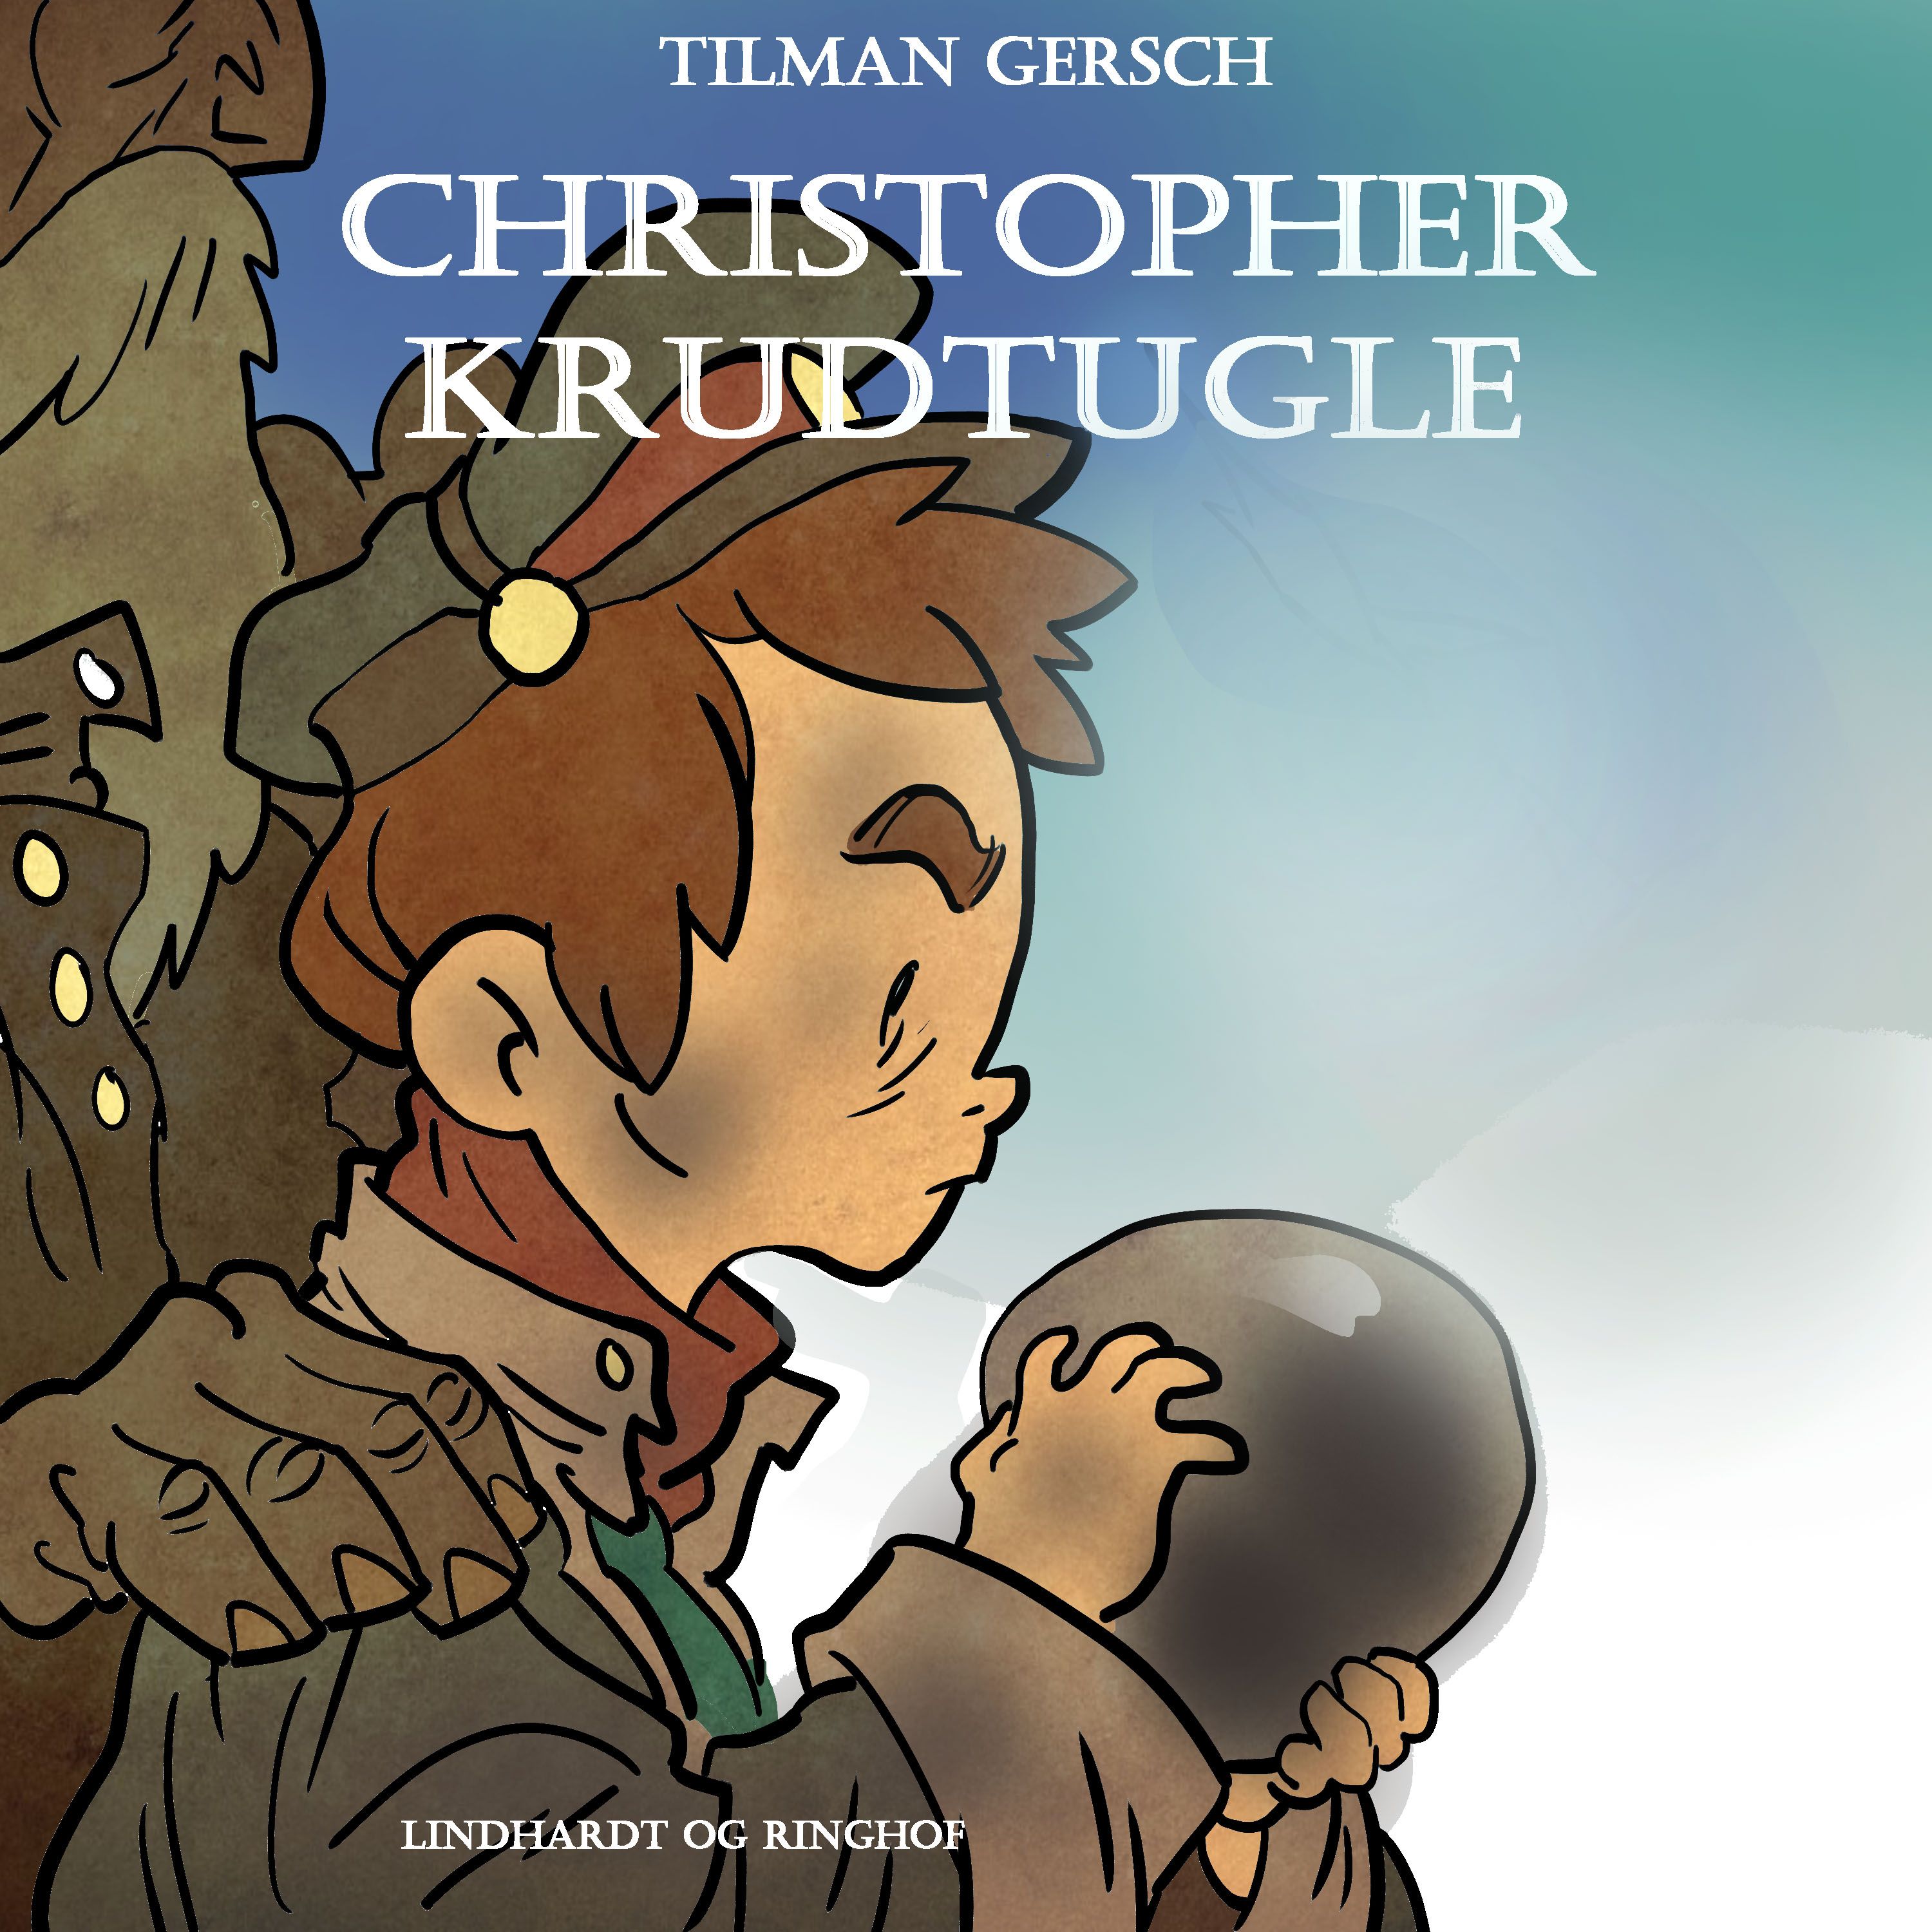 Christopher Krudtugle, ljudbok av Tilman Gersch